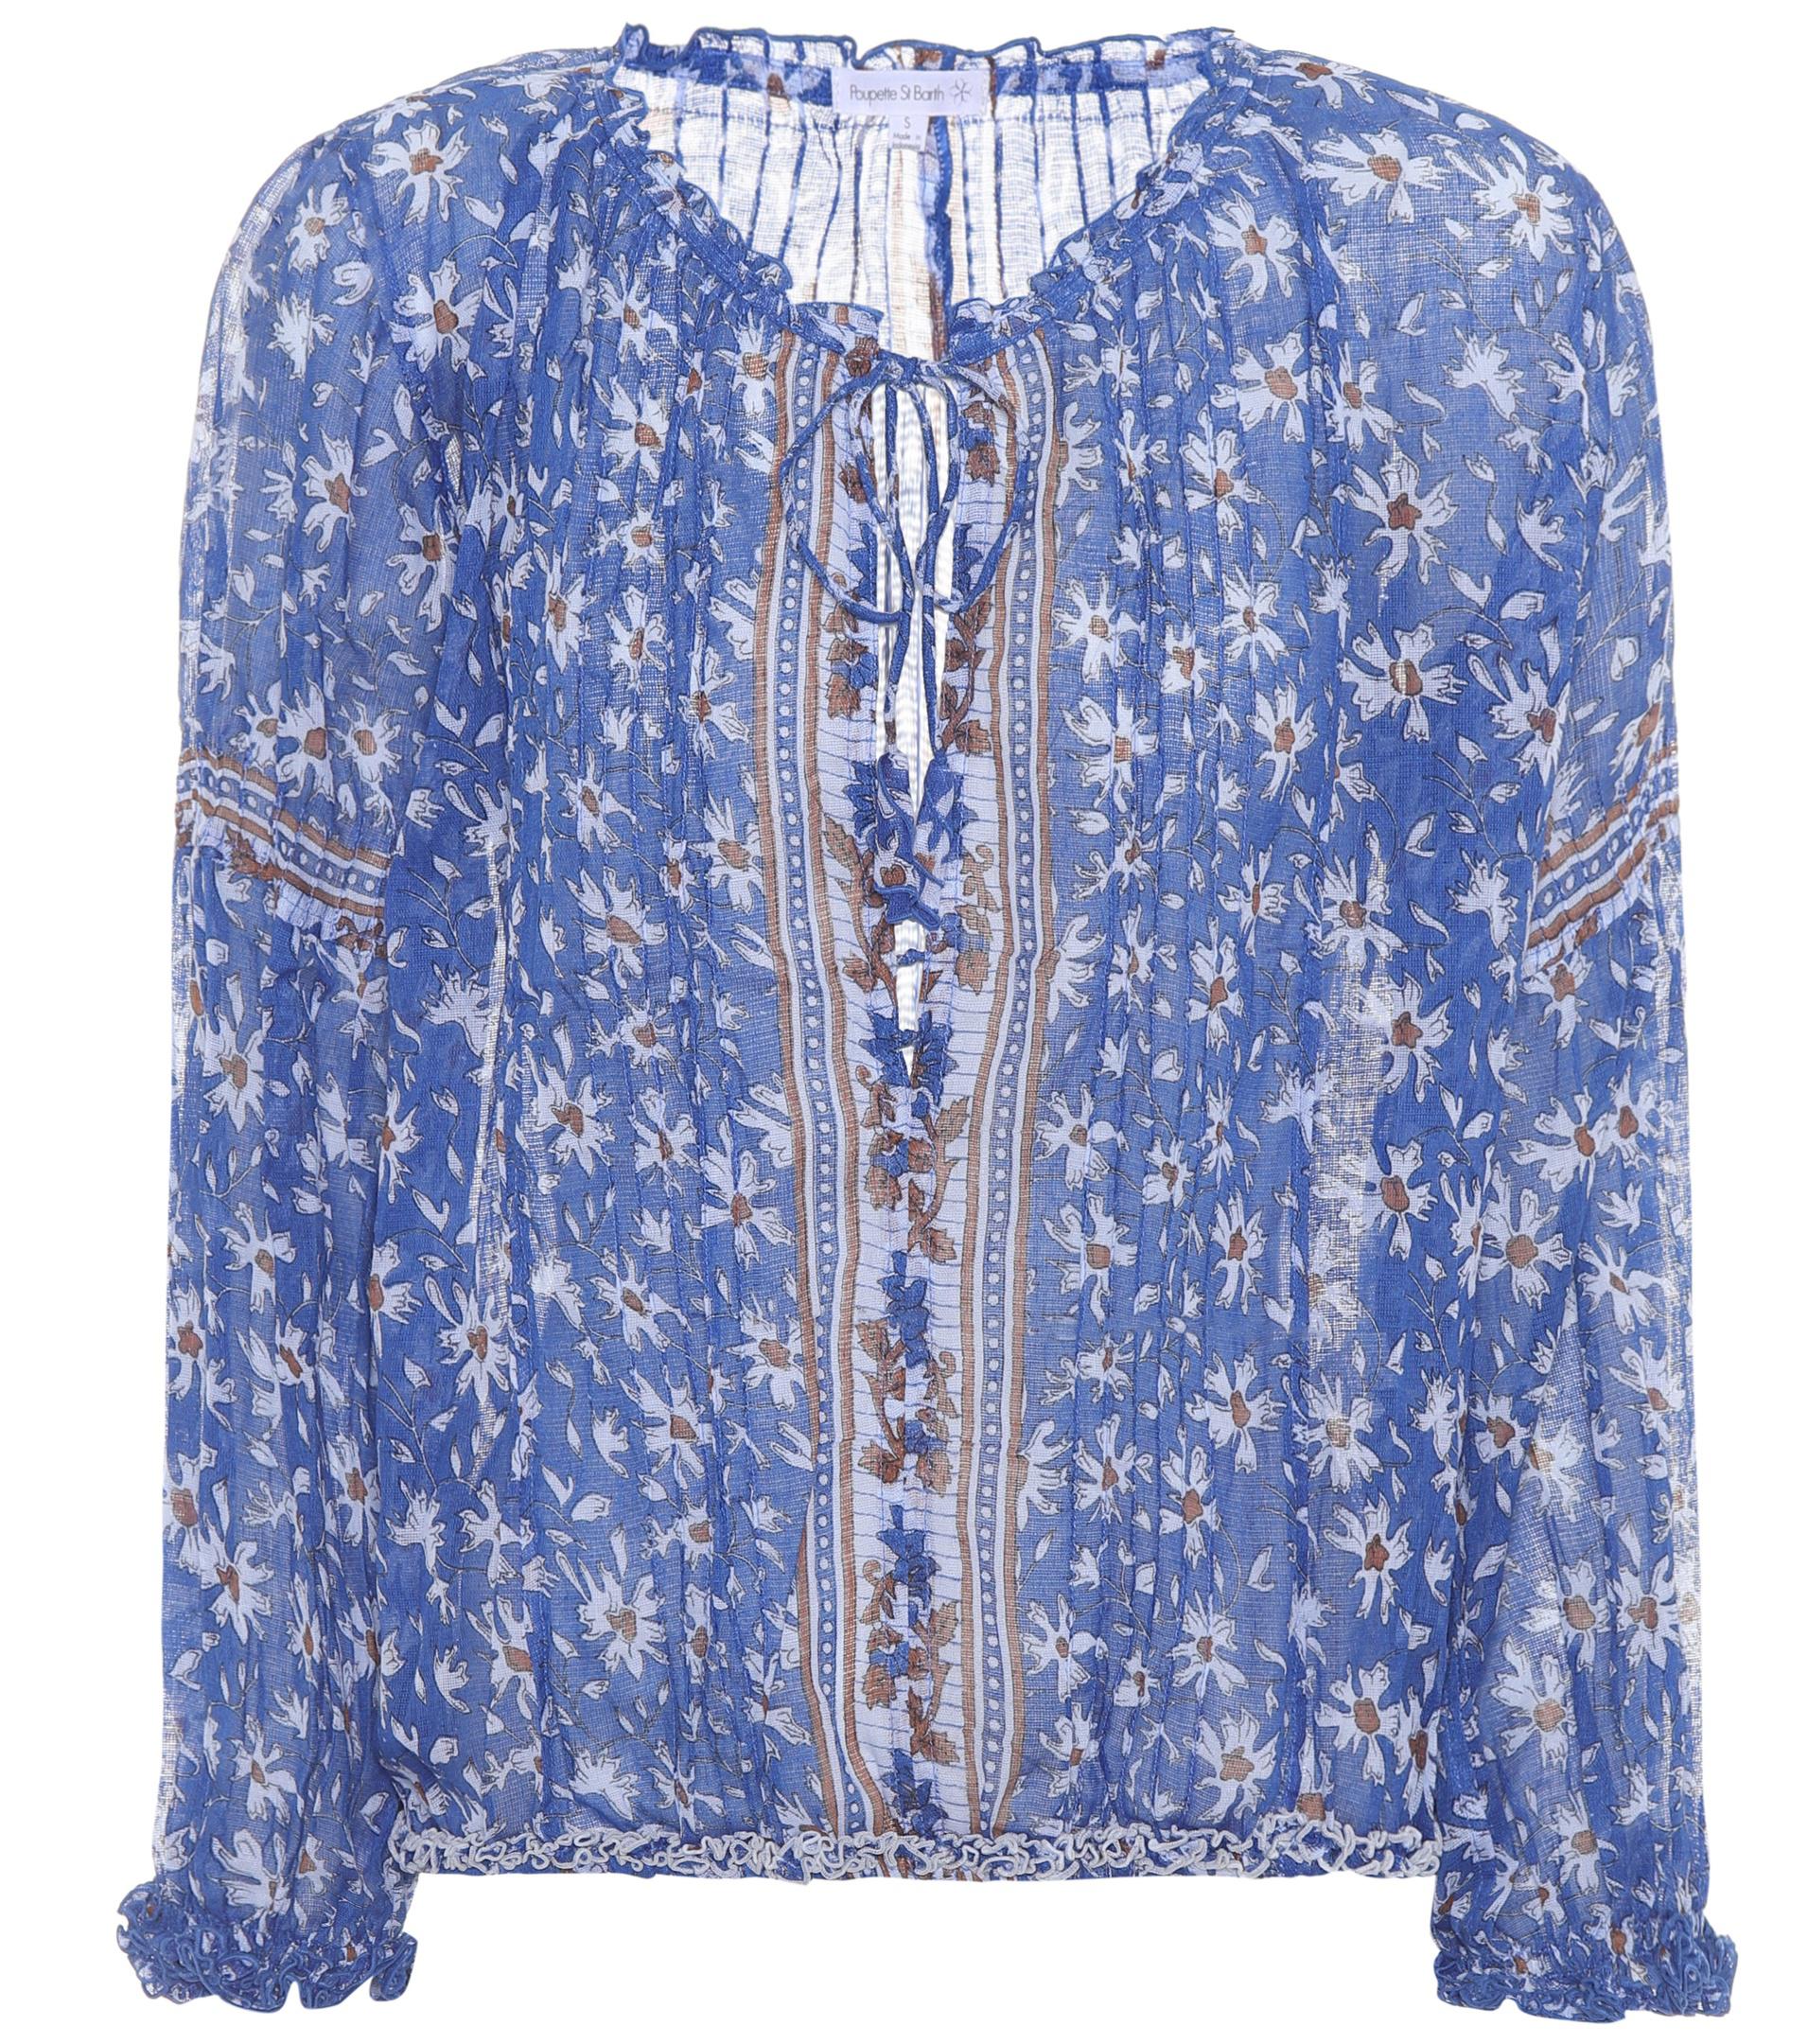 Lyst - Poupette Floral-printed Cotton Top in Blue